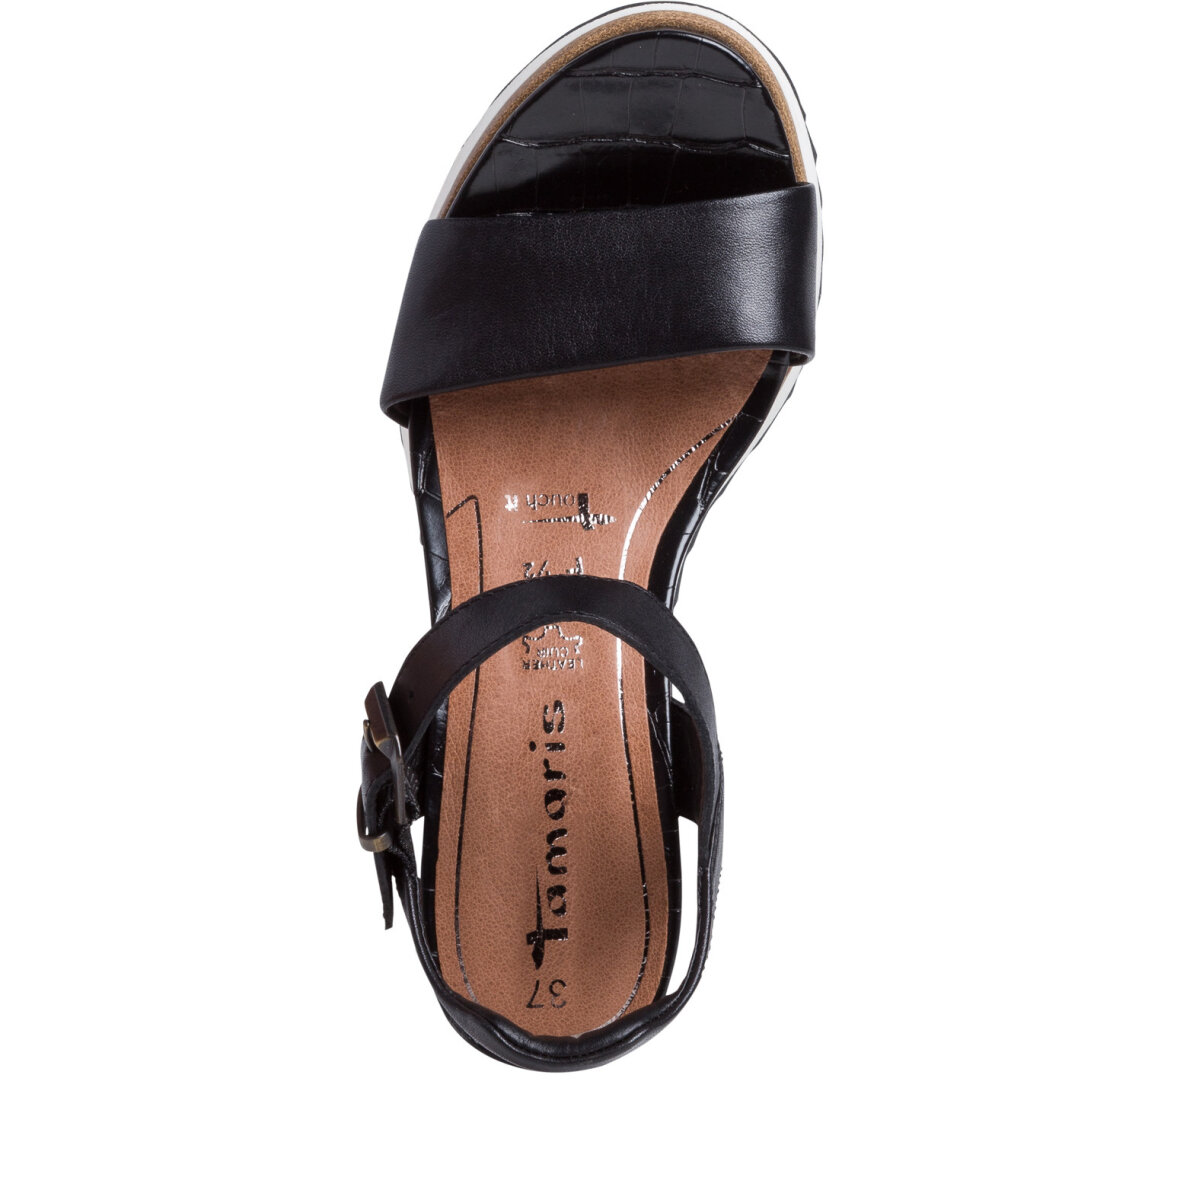 sort sandal kilehæl 6,5 cm